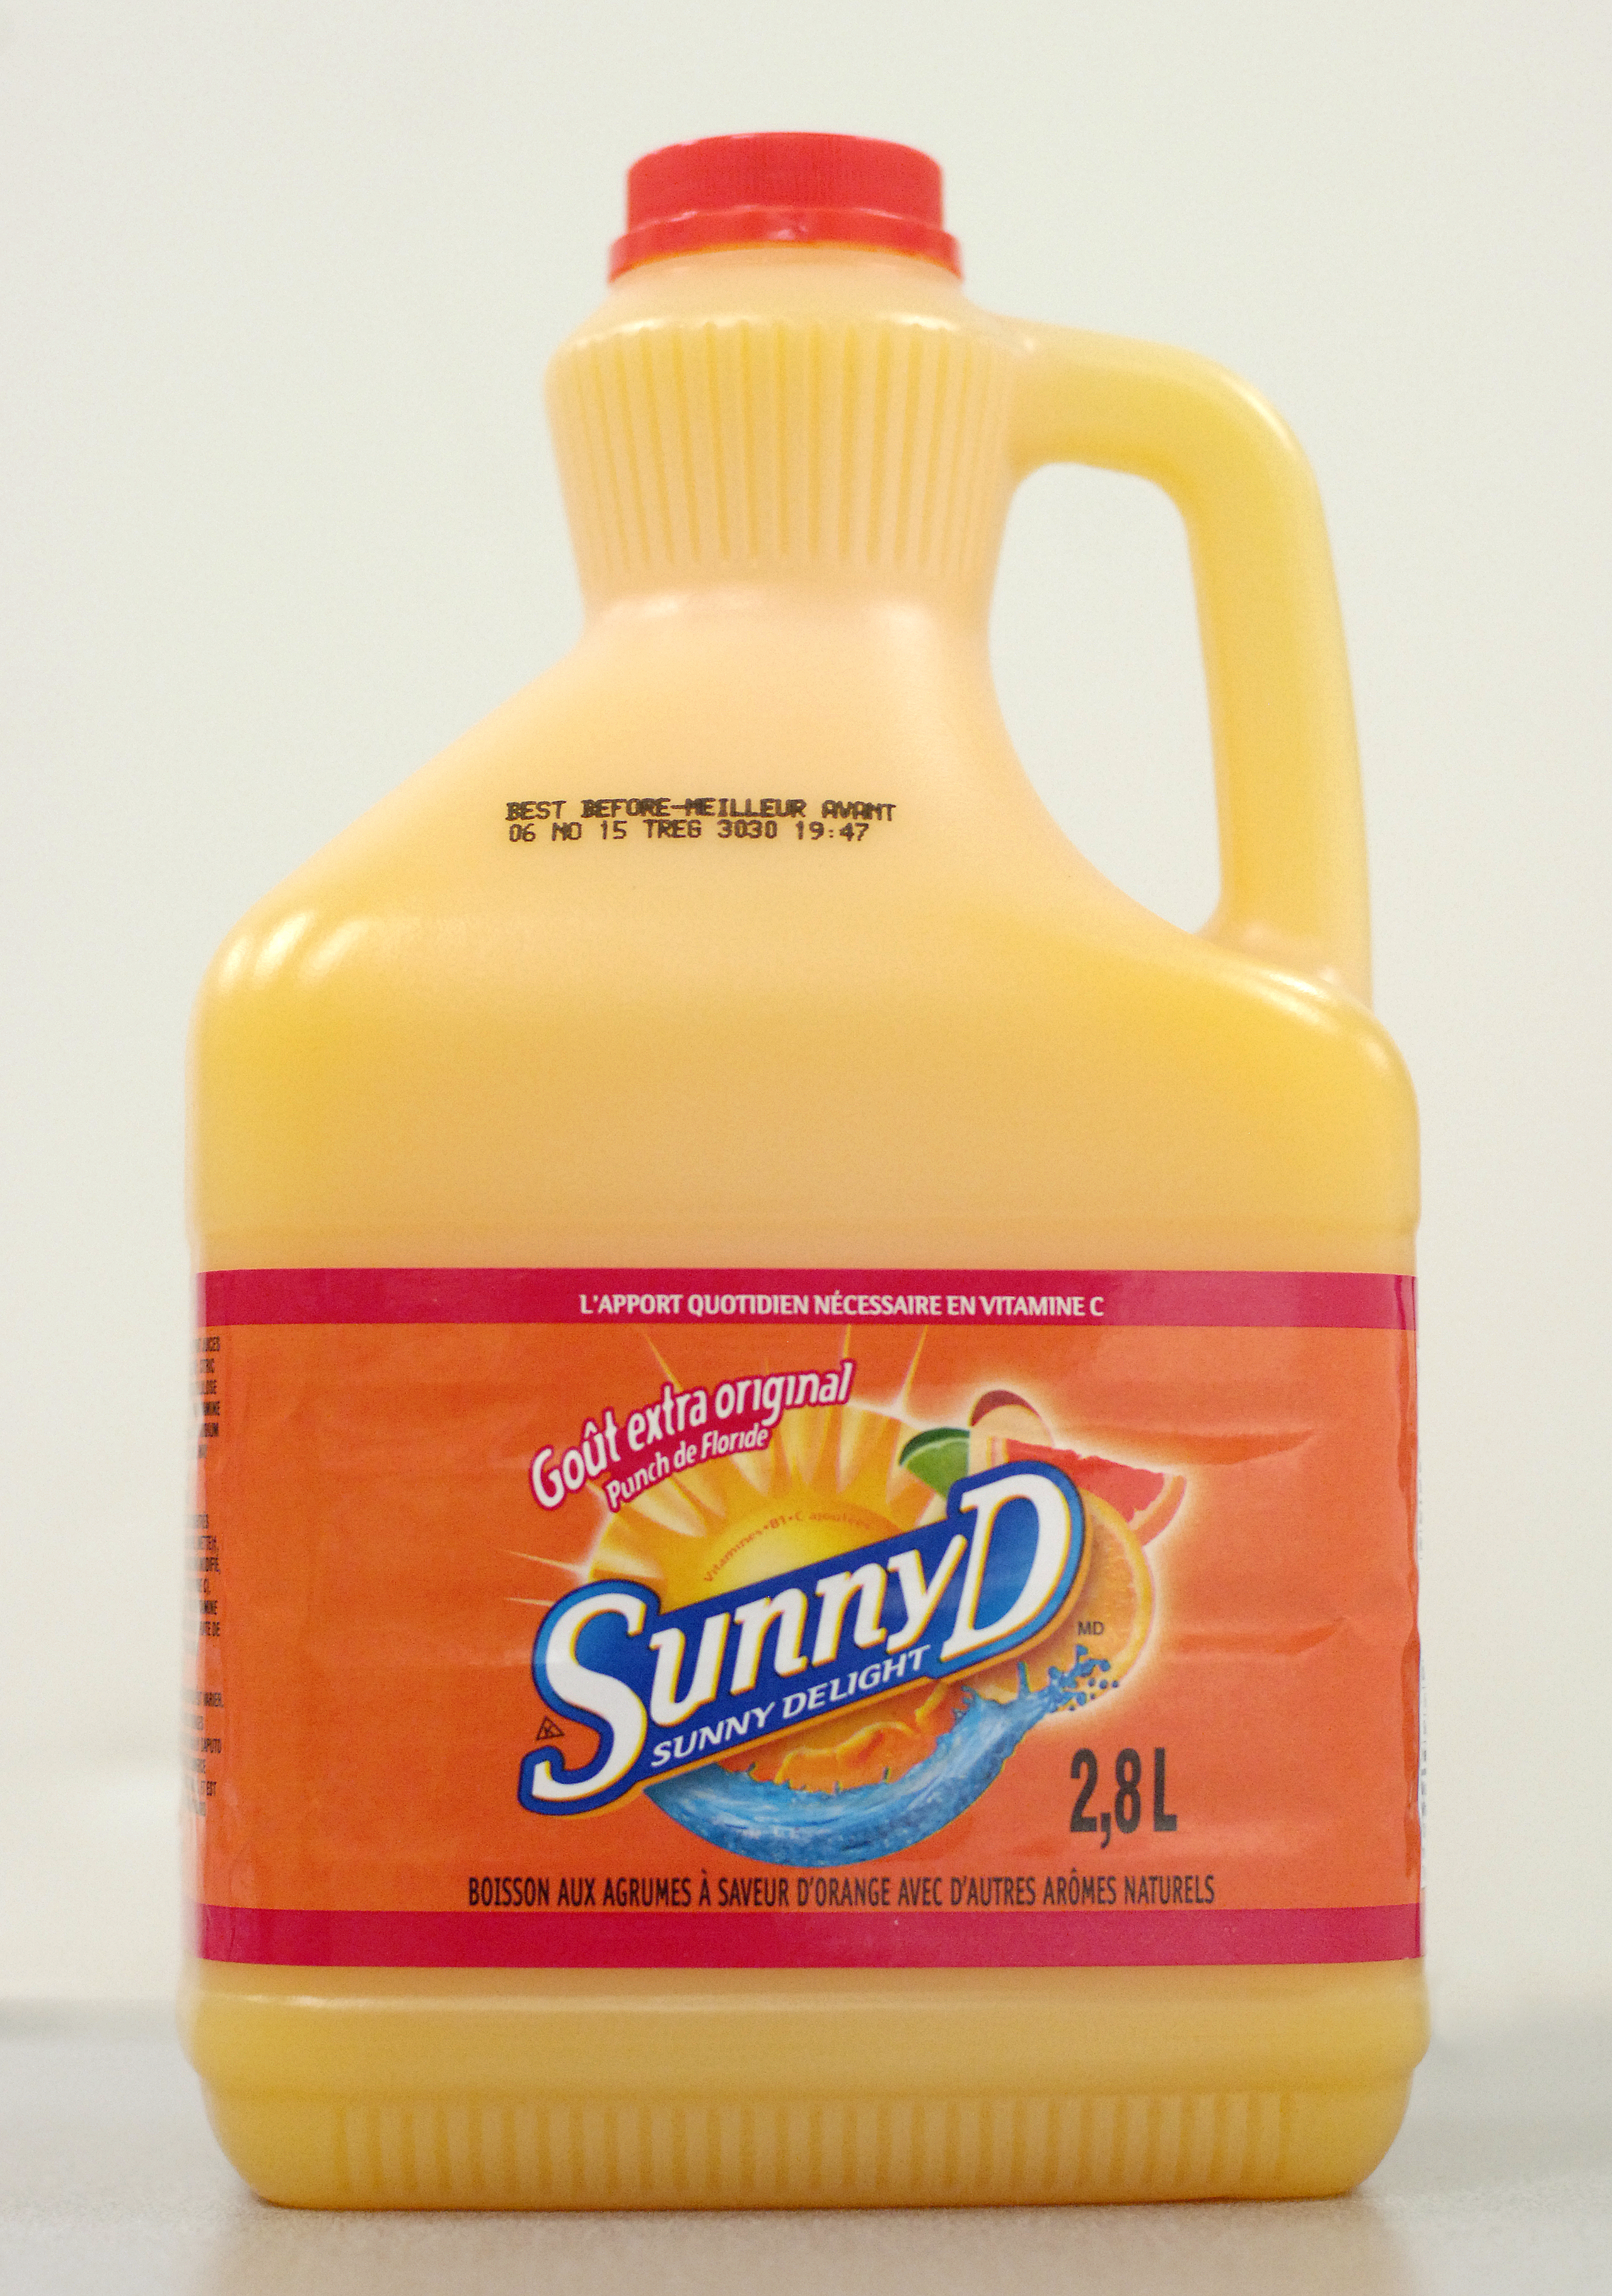 2.8 litre jug of Sunny D beverage for Vice Squad, Friday Health